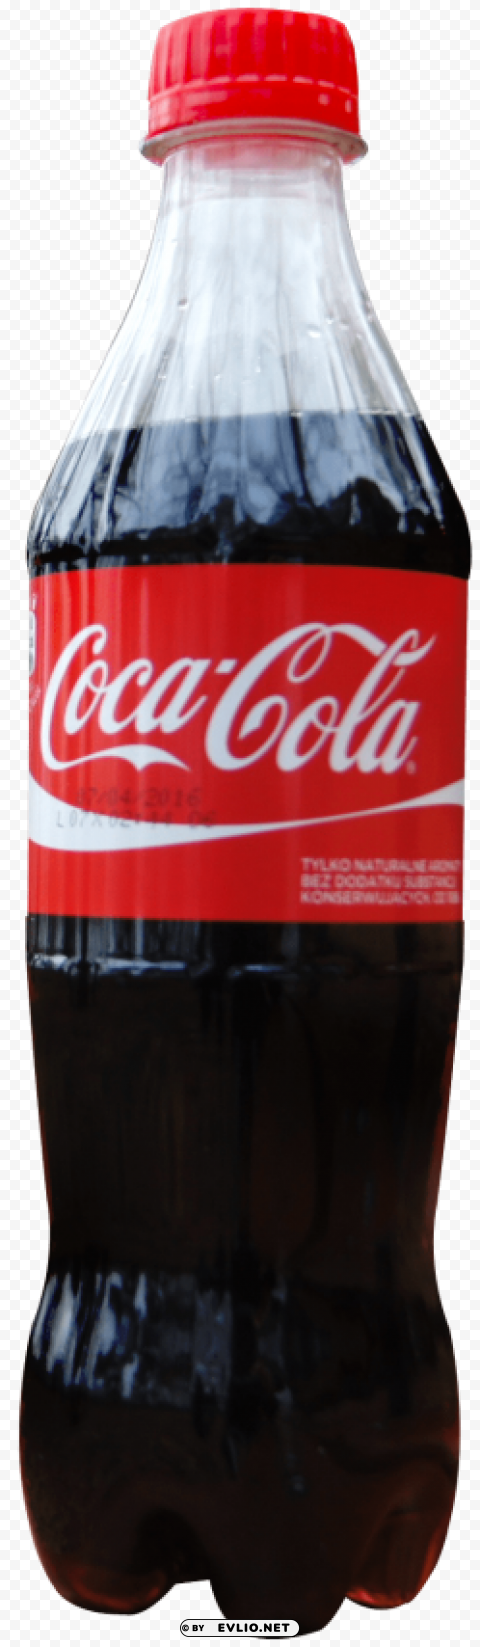 coca cola PNG images for websites